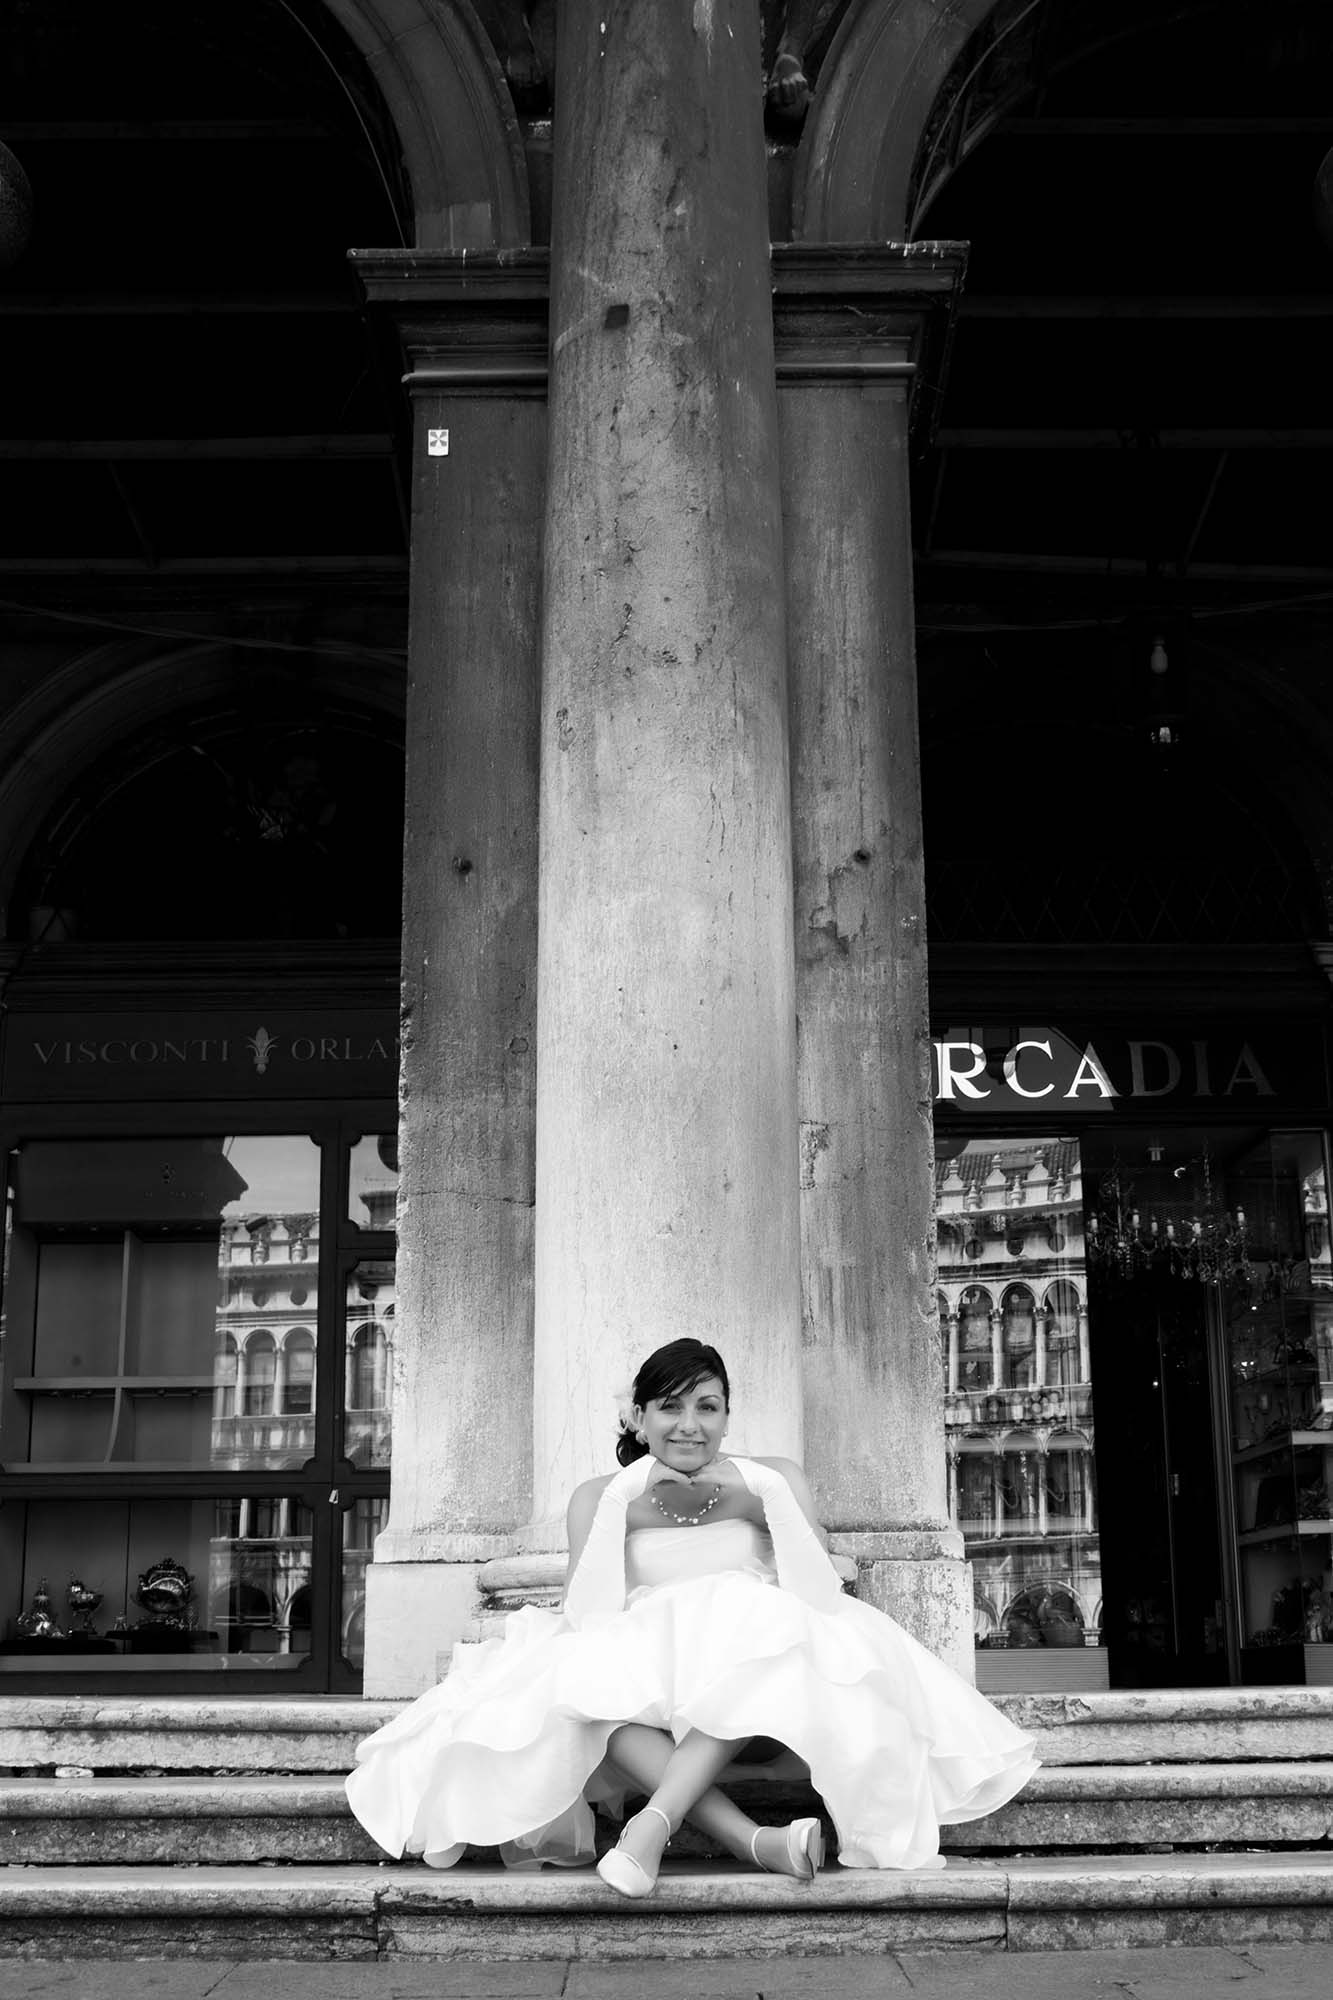 After Wedding Fotoshooting in Venedig